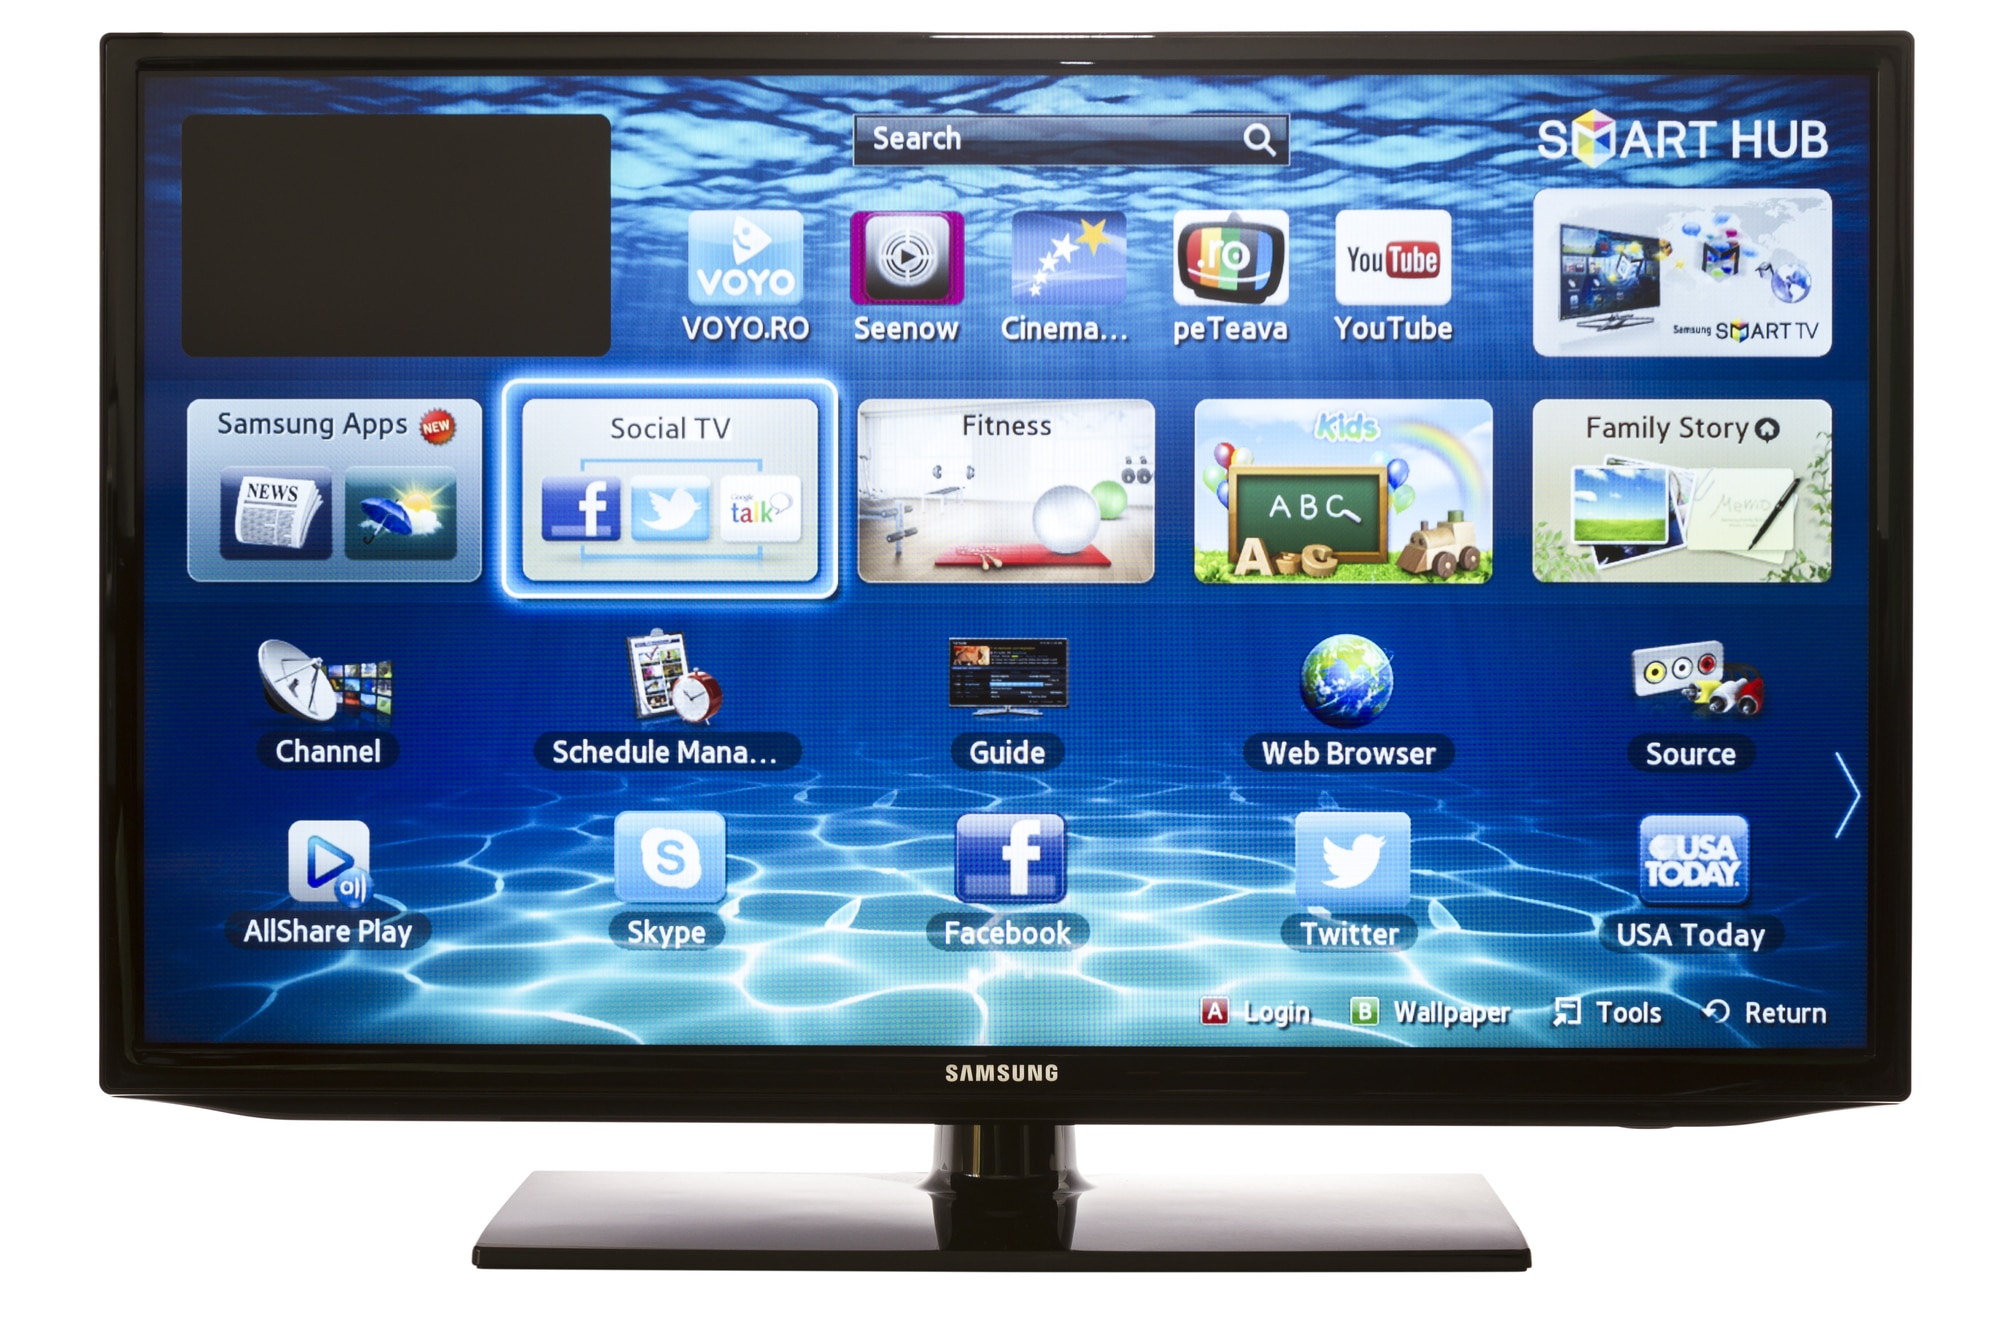 Ip телевизора samsung. Смарт ТВ самсунг 2013. Samsung apps для Smart TV. Браузер в телевизоре самсунг. Телевизор самсунг смарт 2013 года.